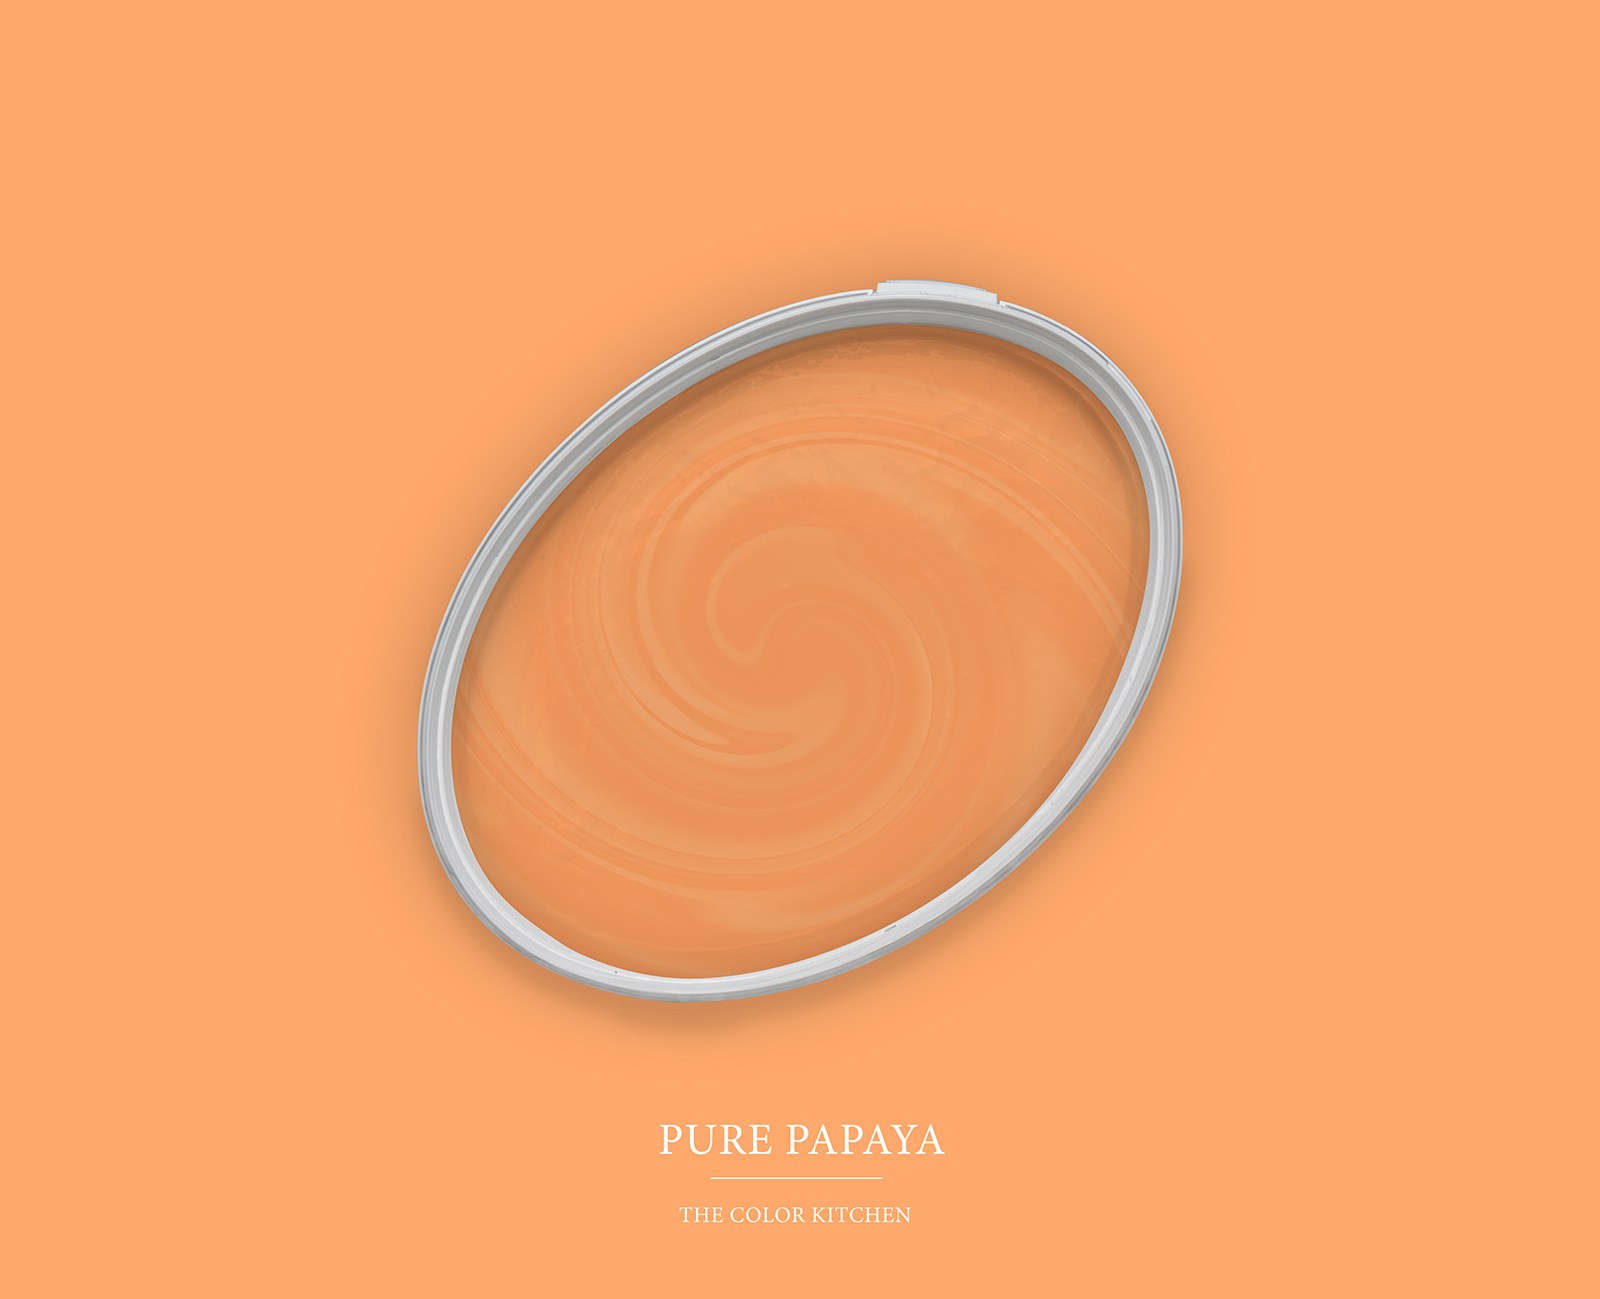         Wandfarbe in knalligem Orange »Pure Papaya« TCK5010 – 2,5 Liter
    